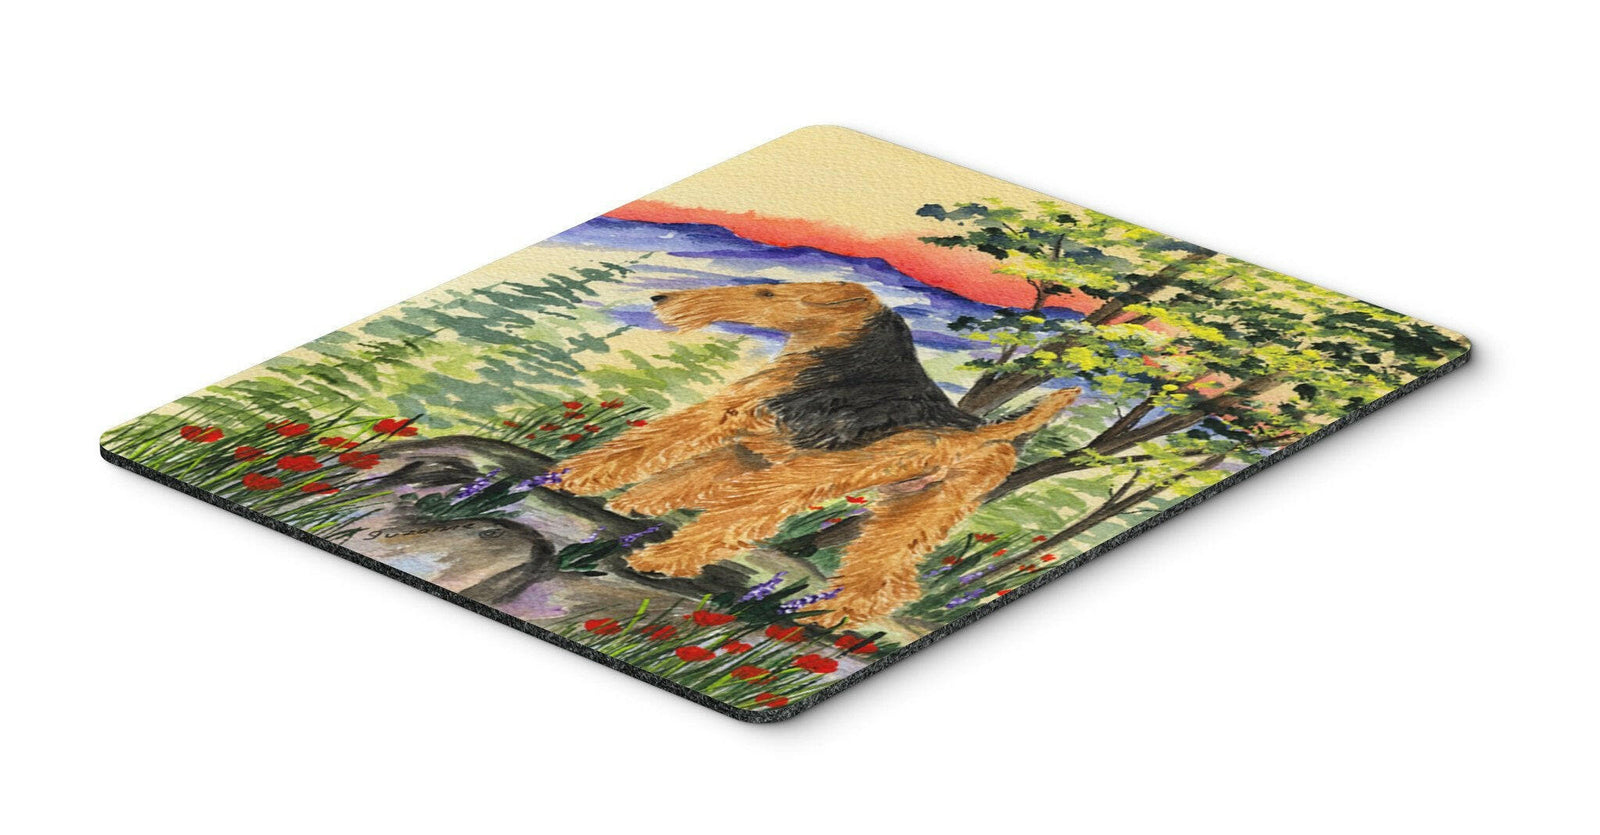 Lakeland Terrier Mouse Pad / Hot Pad / Trivet by Caroline's Treasures